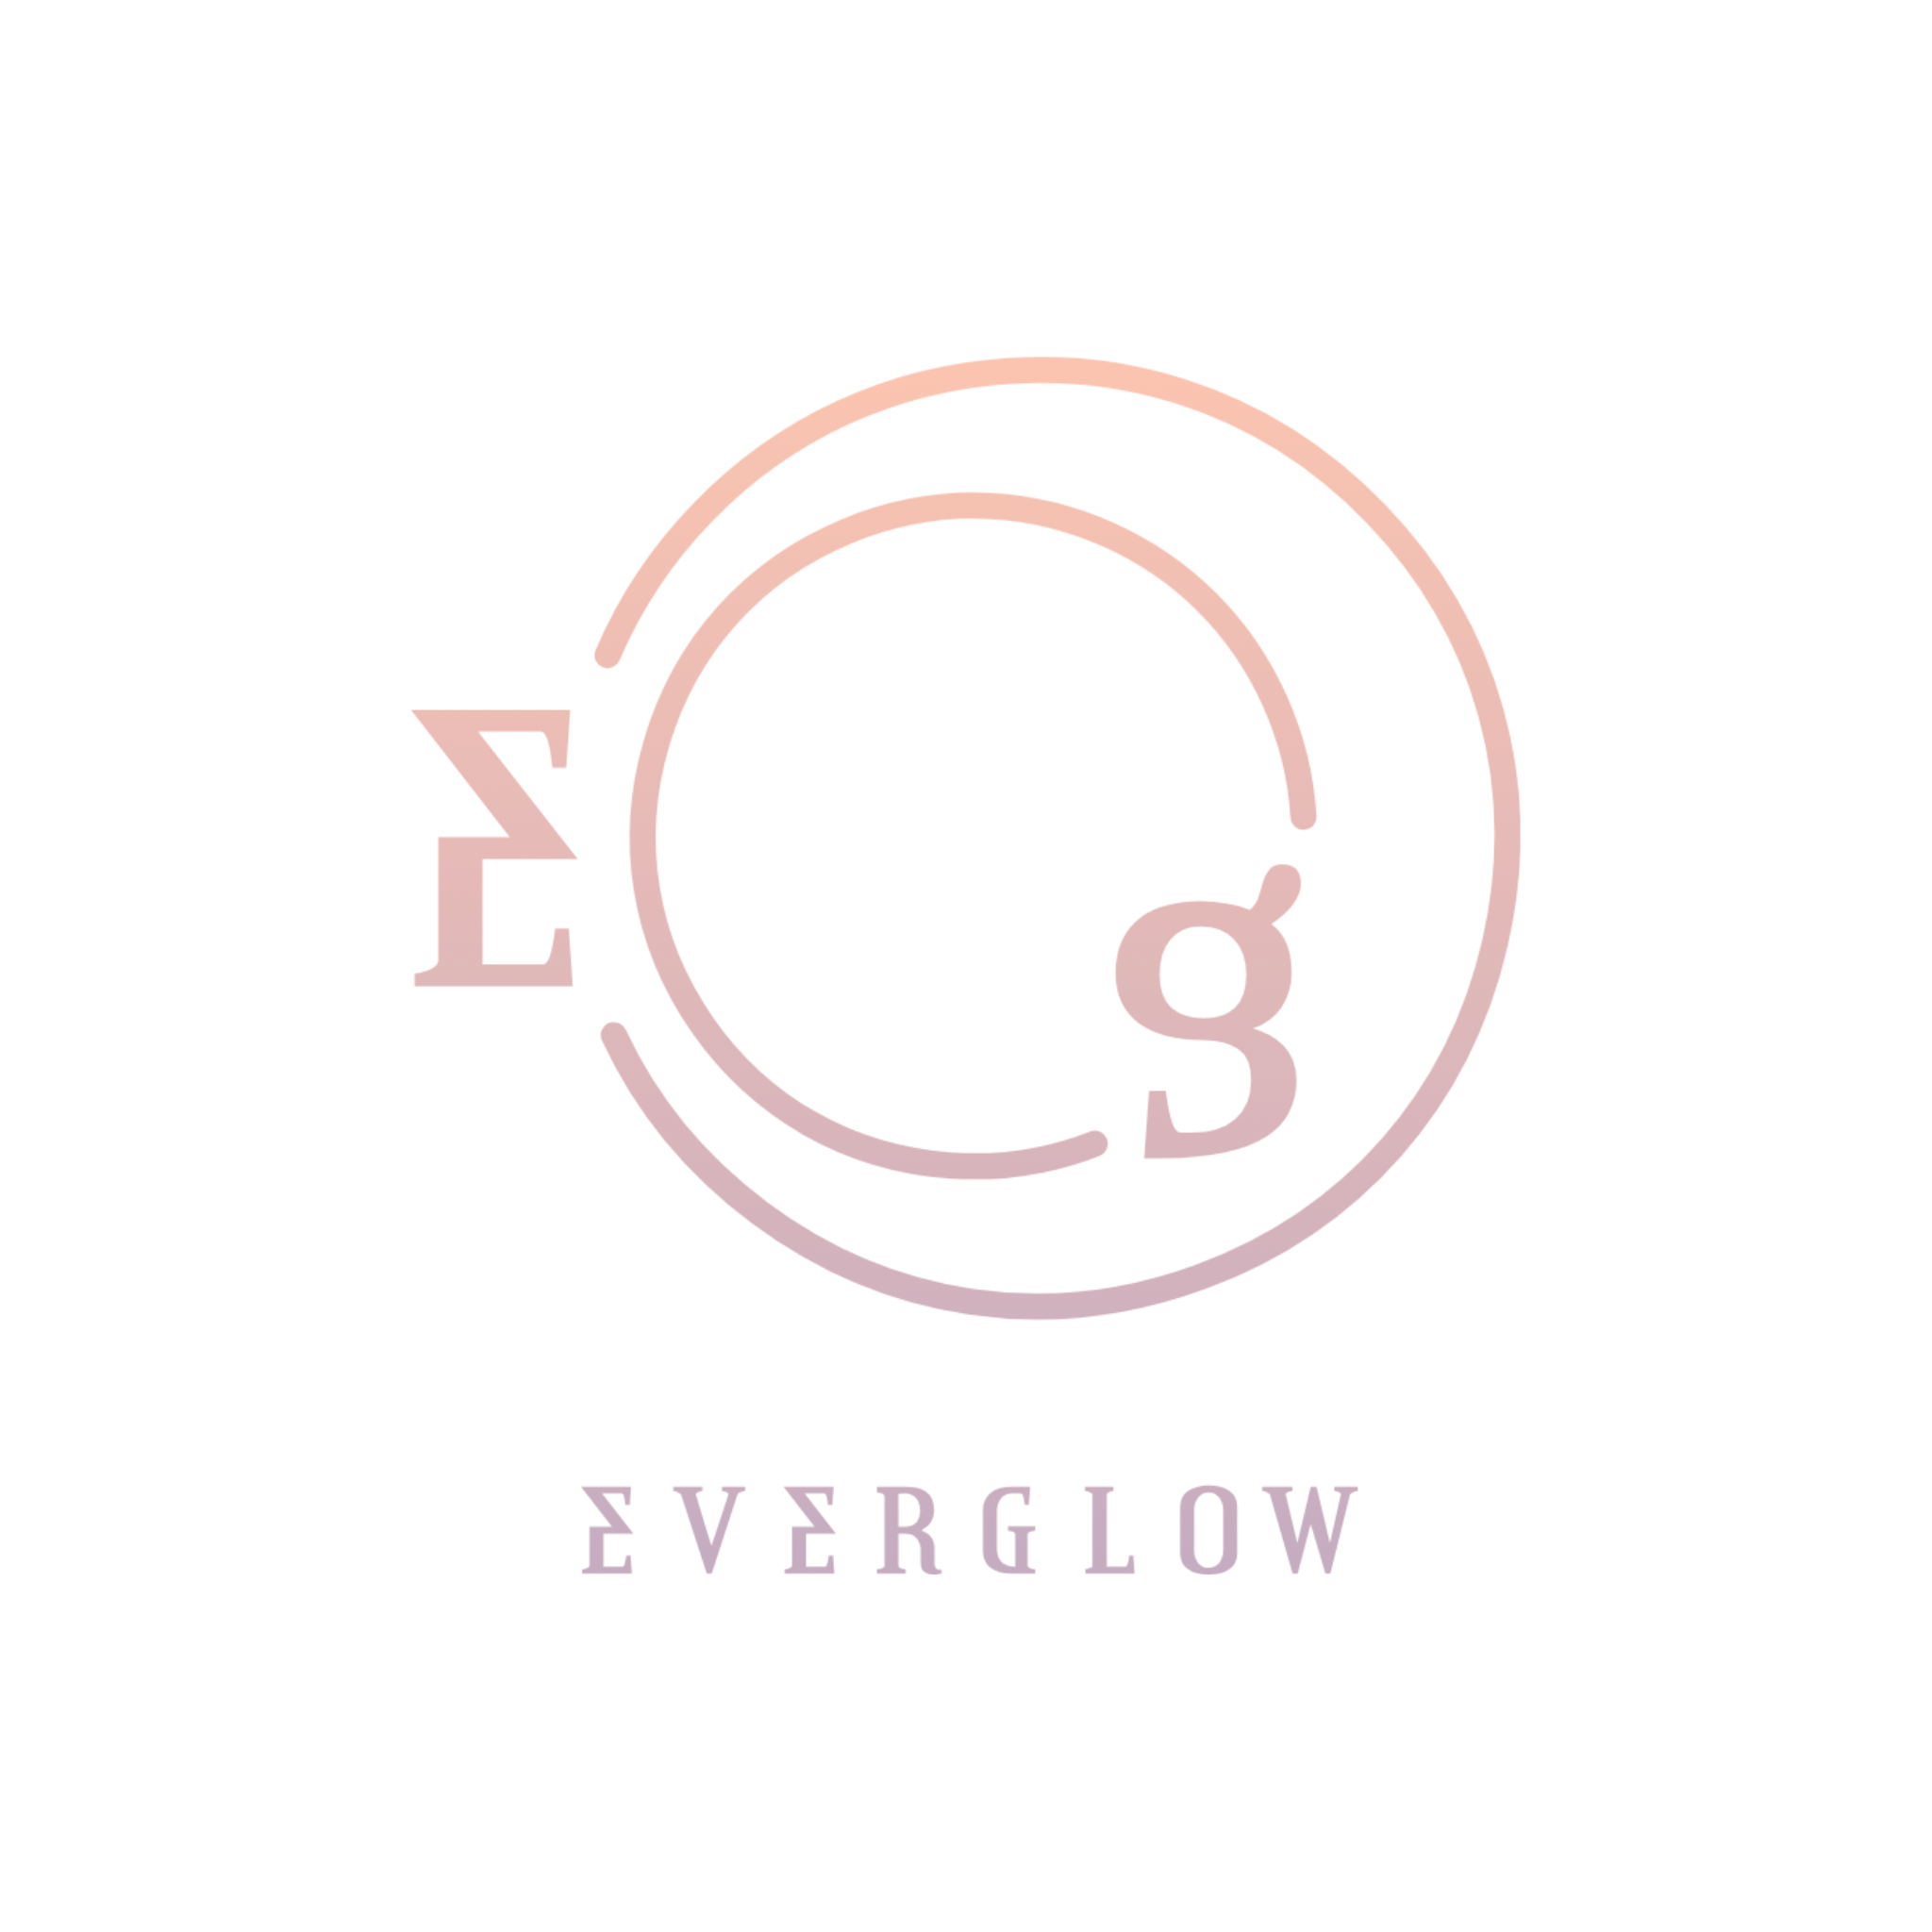 EVERGLOW_LOGO.png